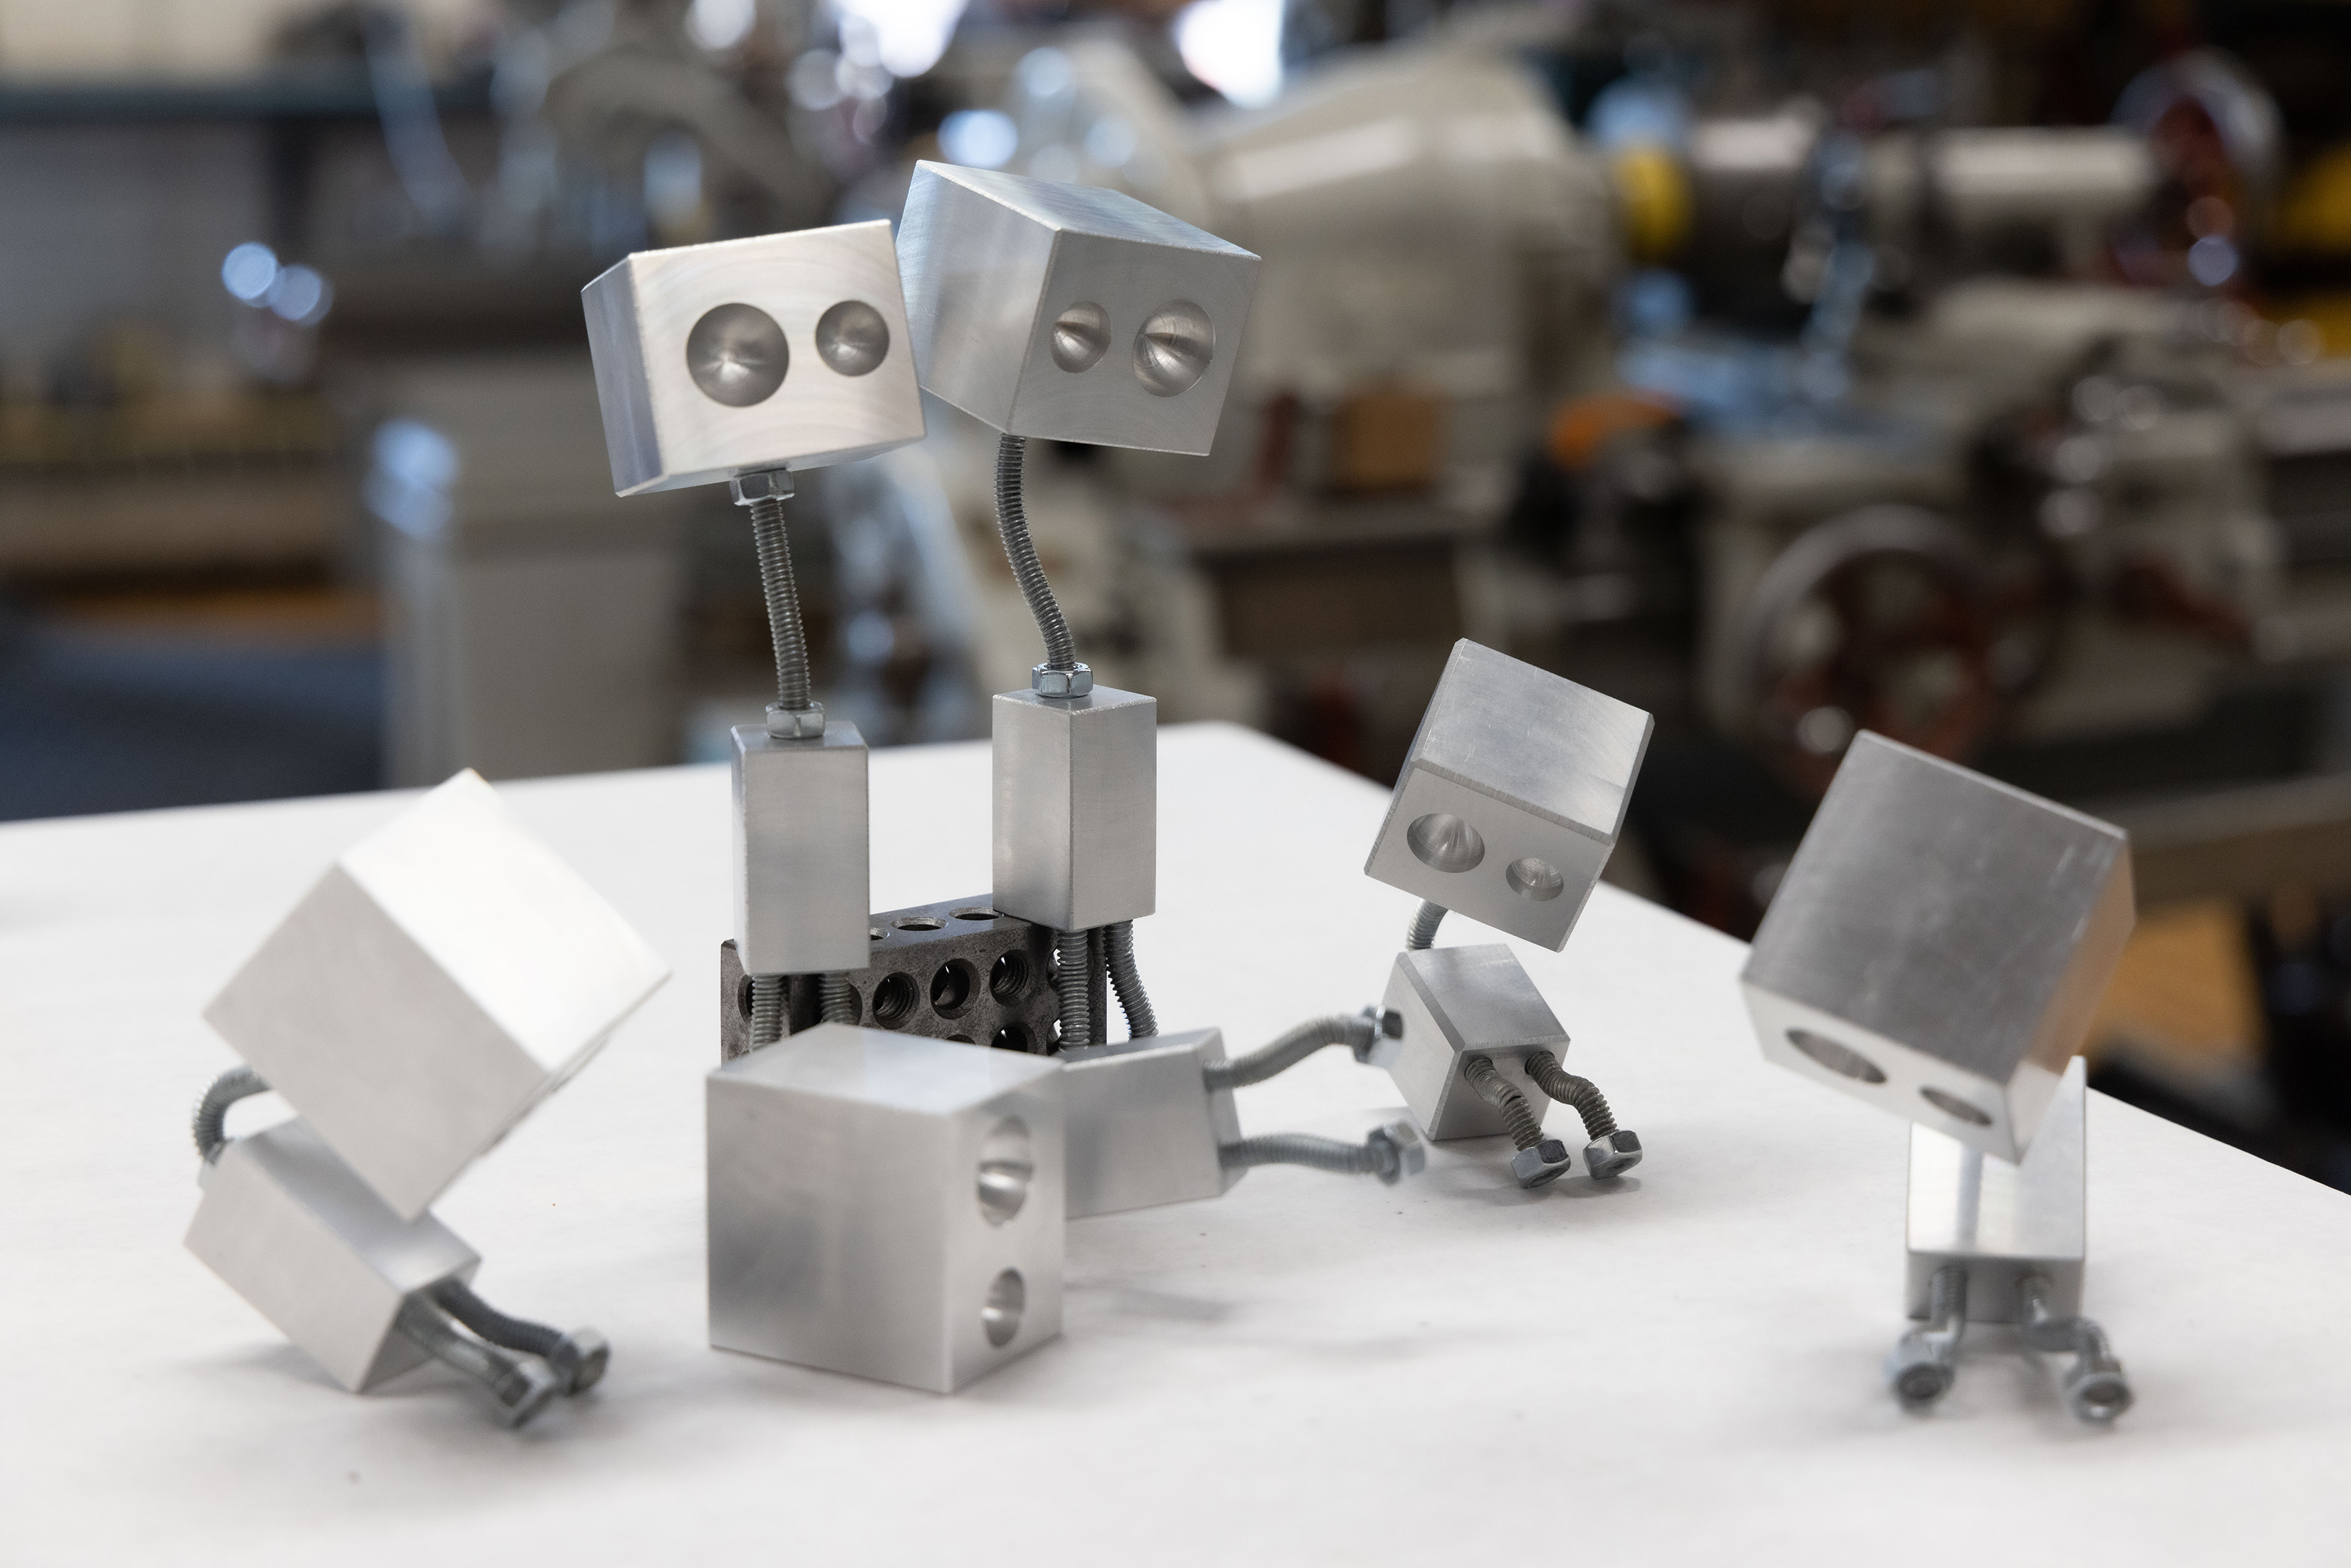 cute little robots by Ethan Howard